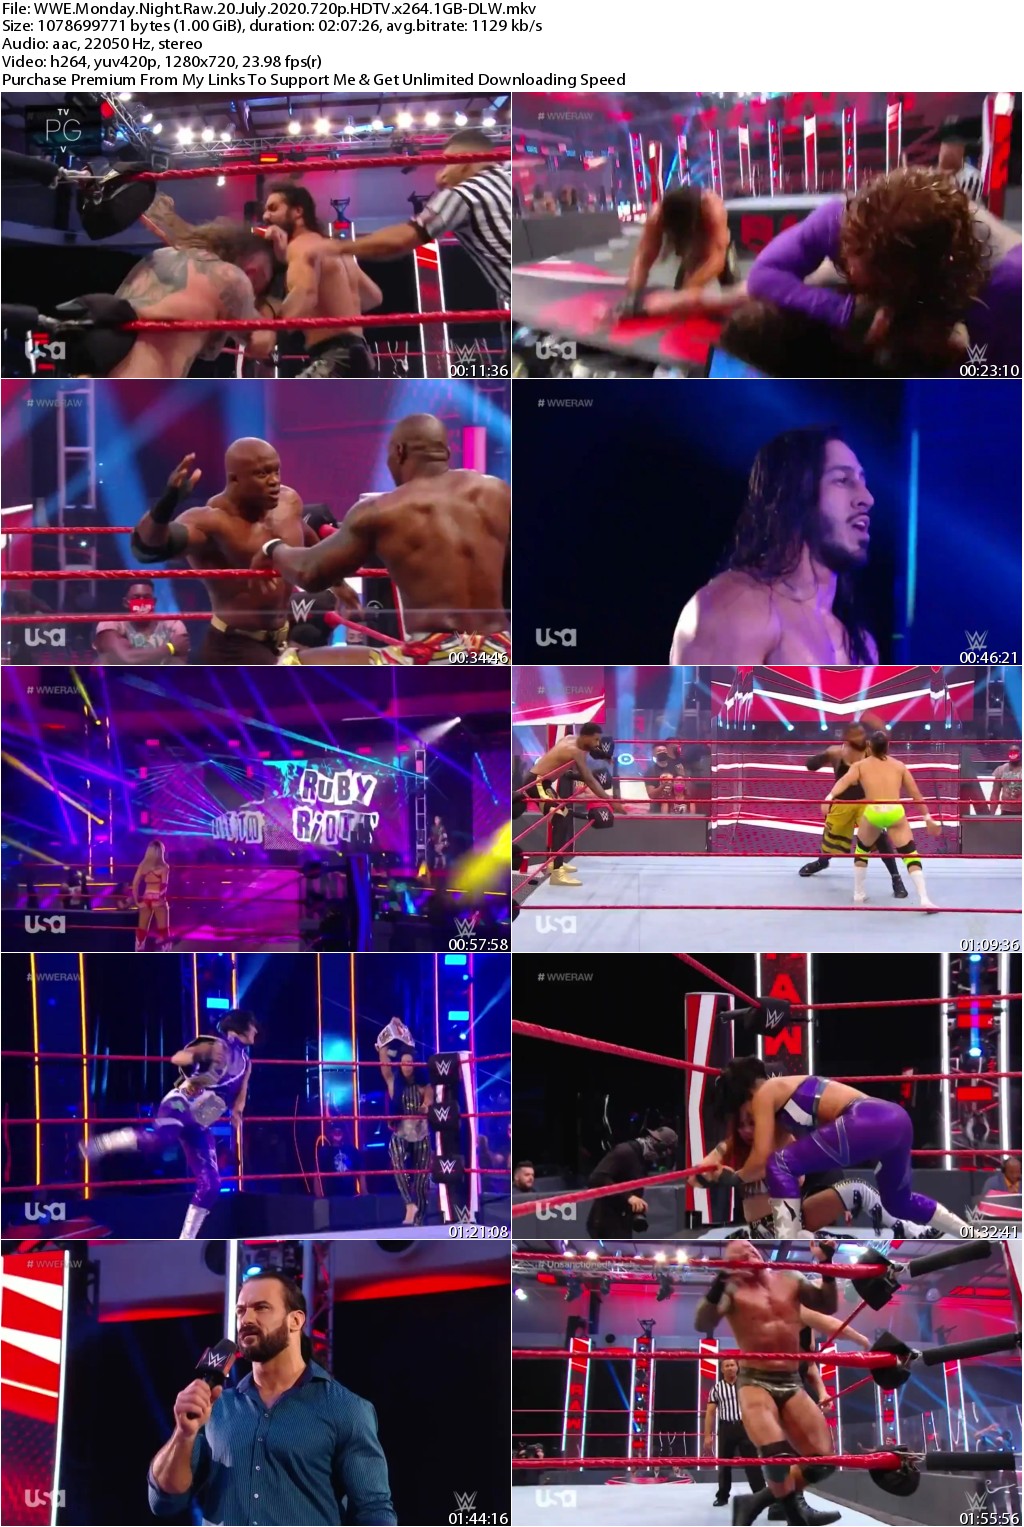 WWE Monday Night Raw 20 July 2020 720p HDTV x264 1GB-DLW